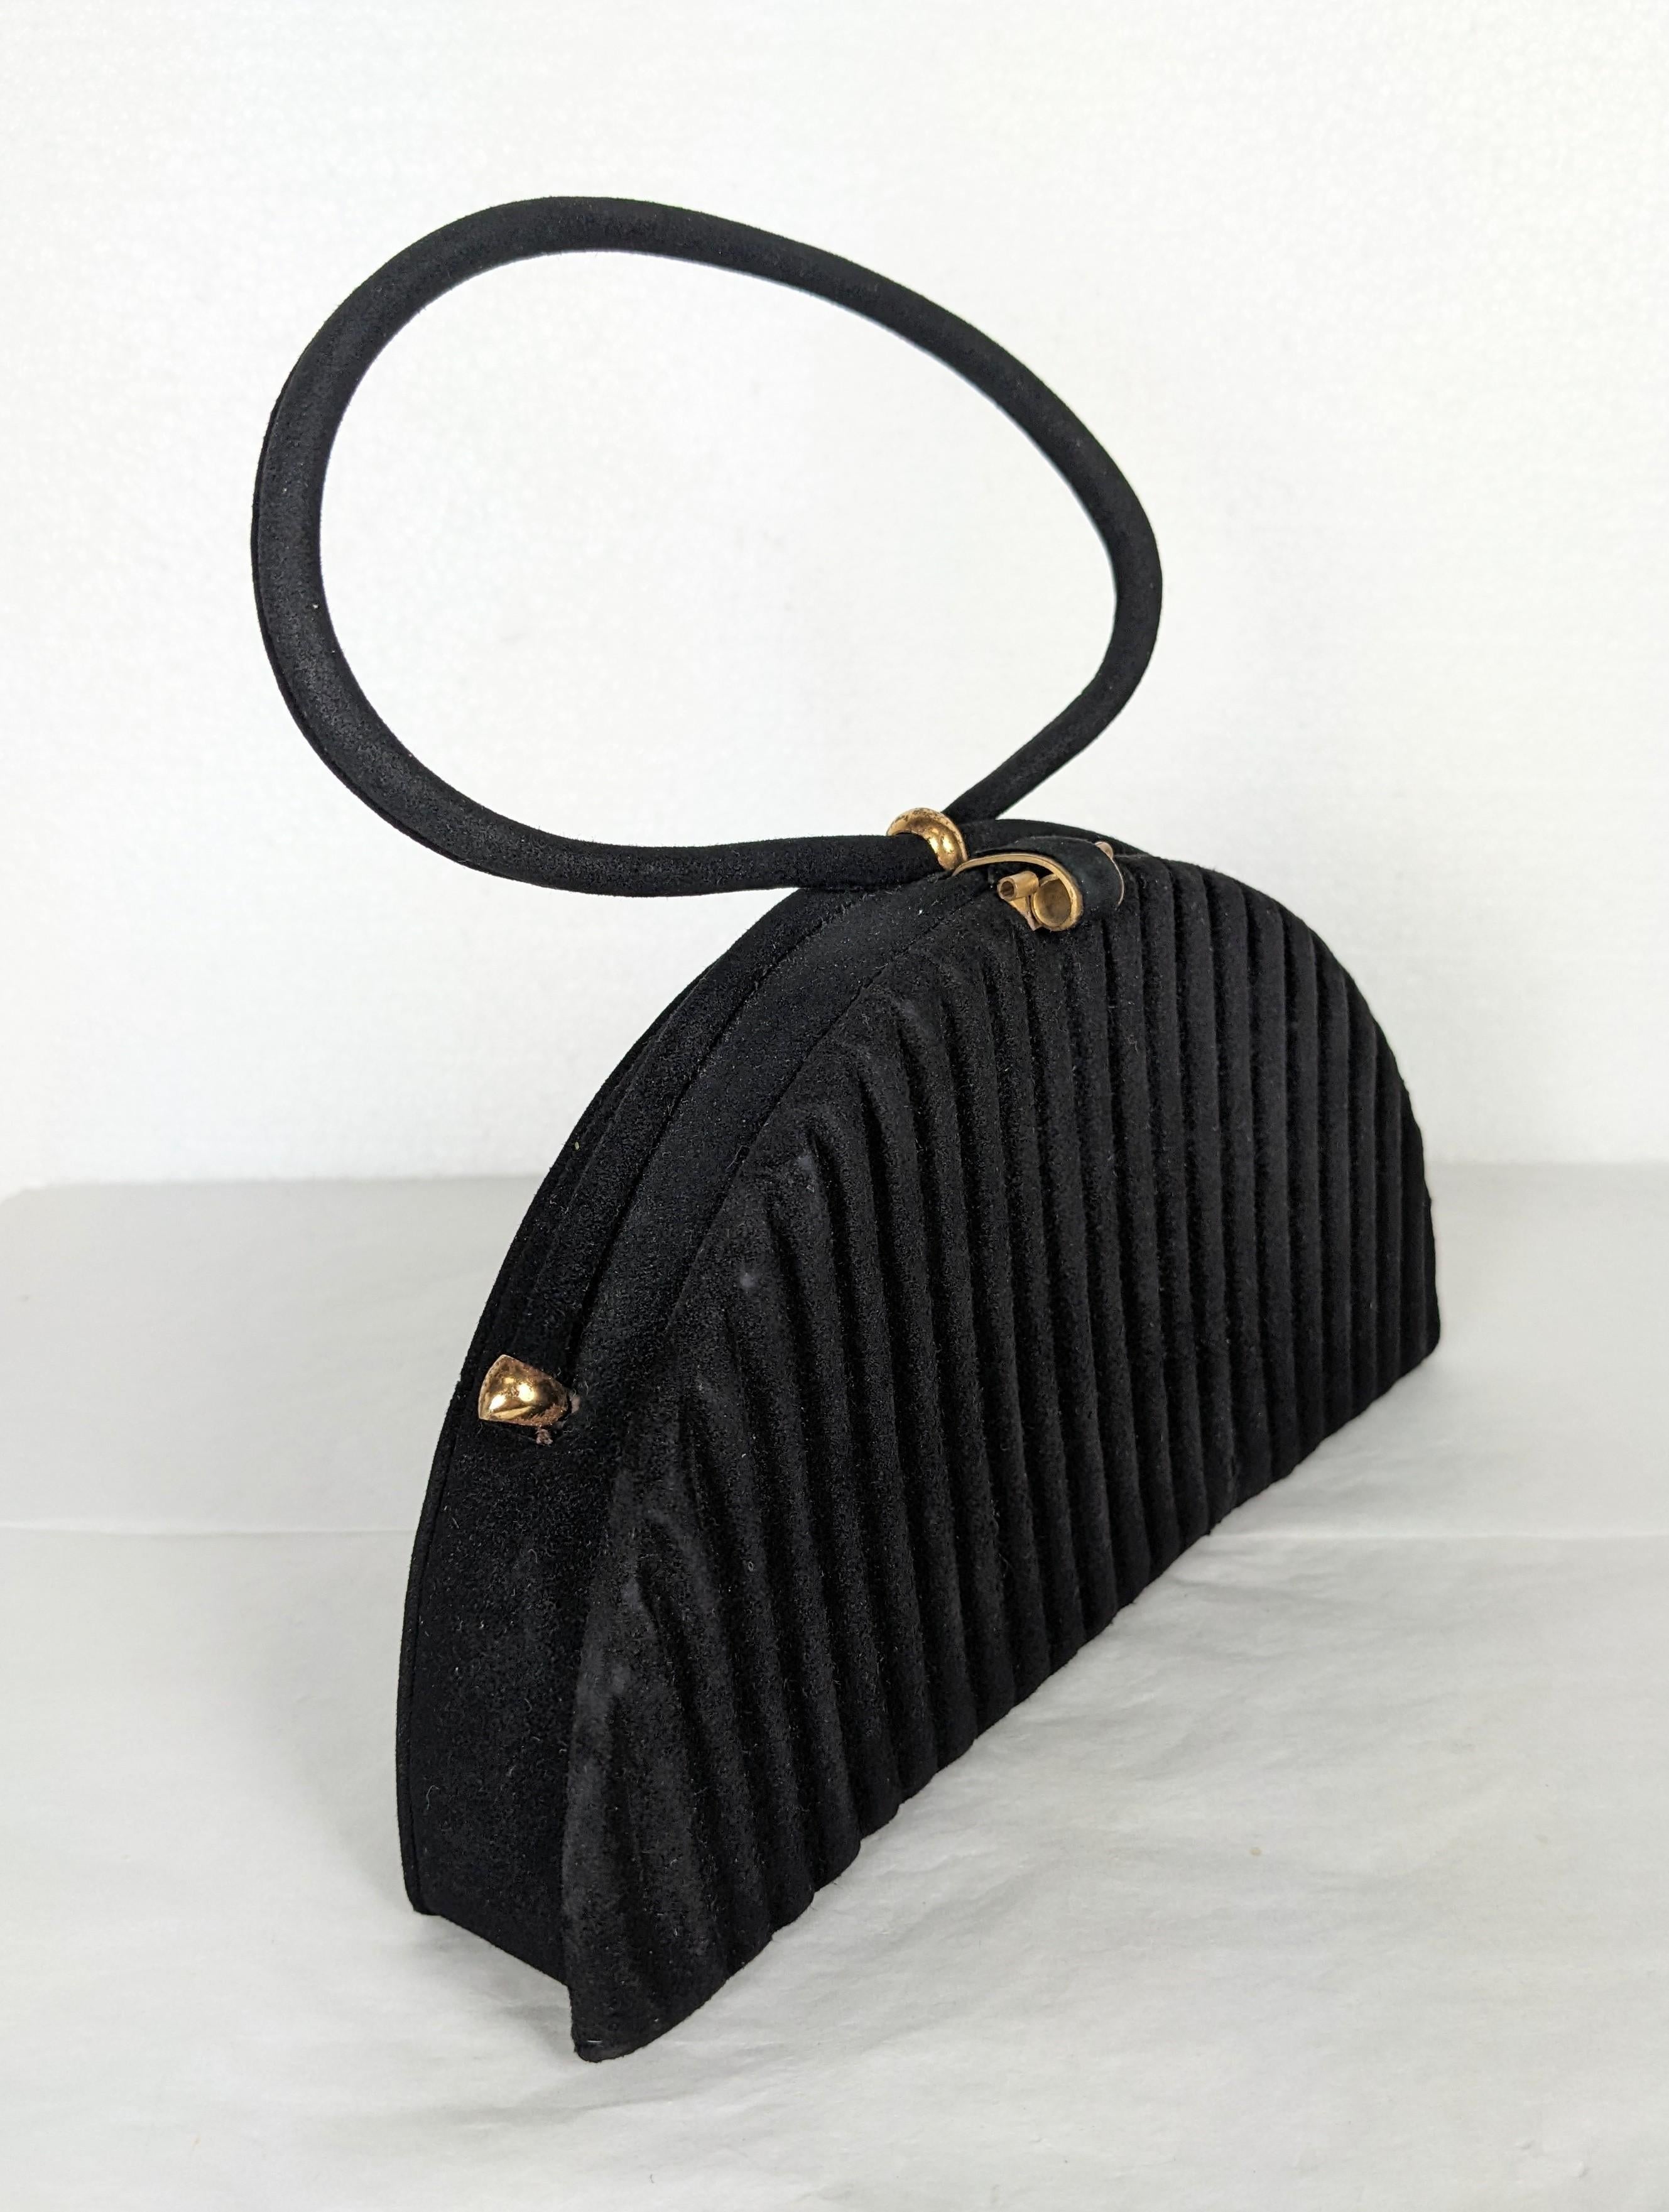 Jean Bernard Figural Black Suede Bag, Paris 1950's For Sale 1